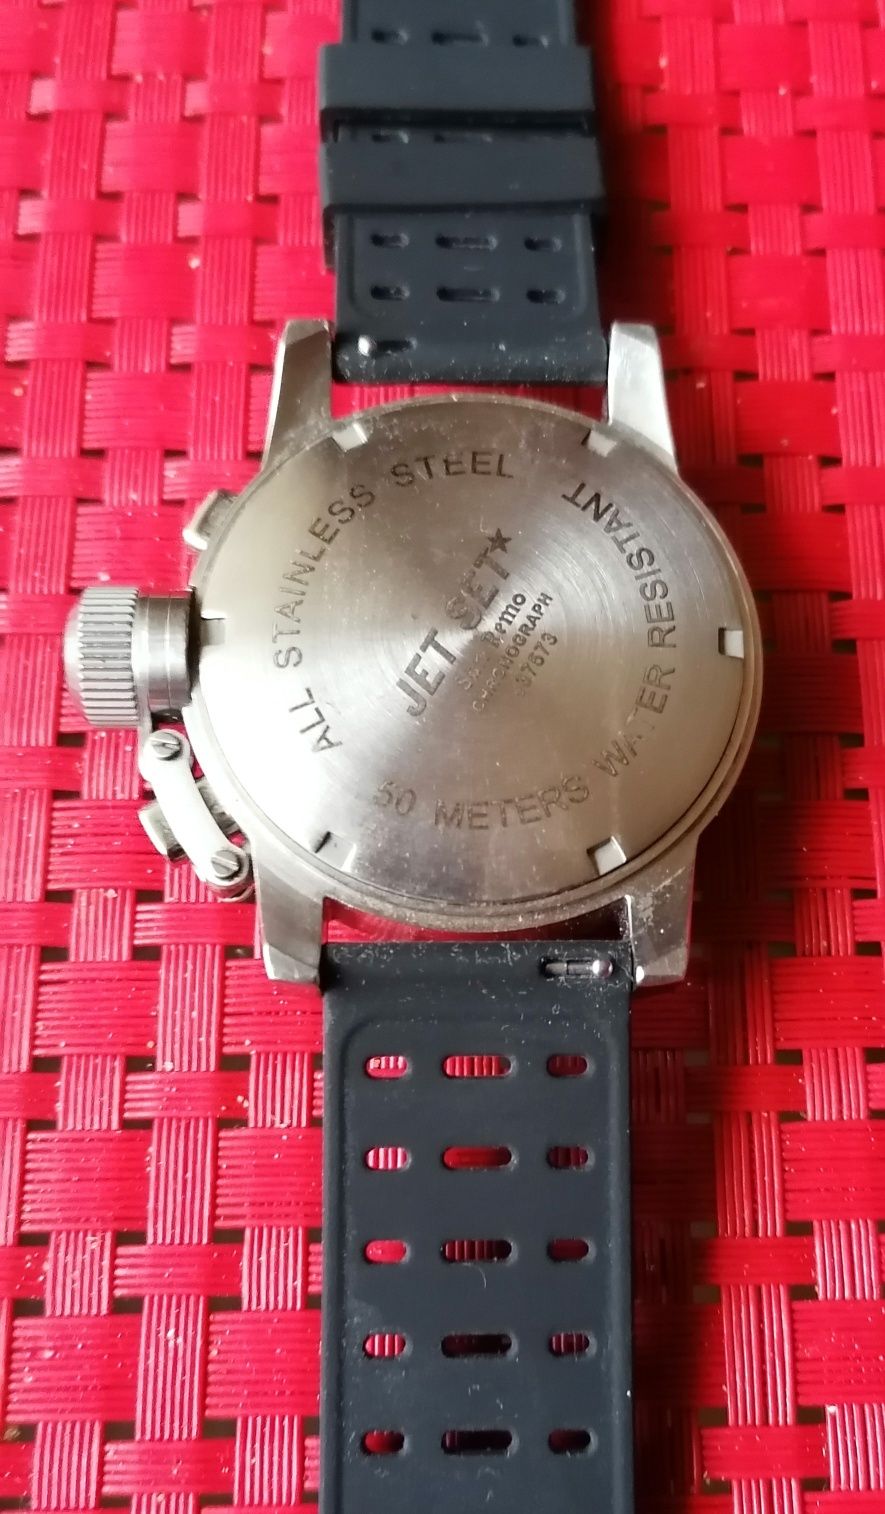 Мъжки часовник с хронограф Jet Set San Remo